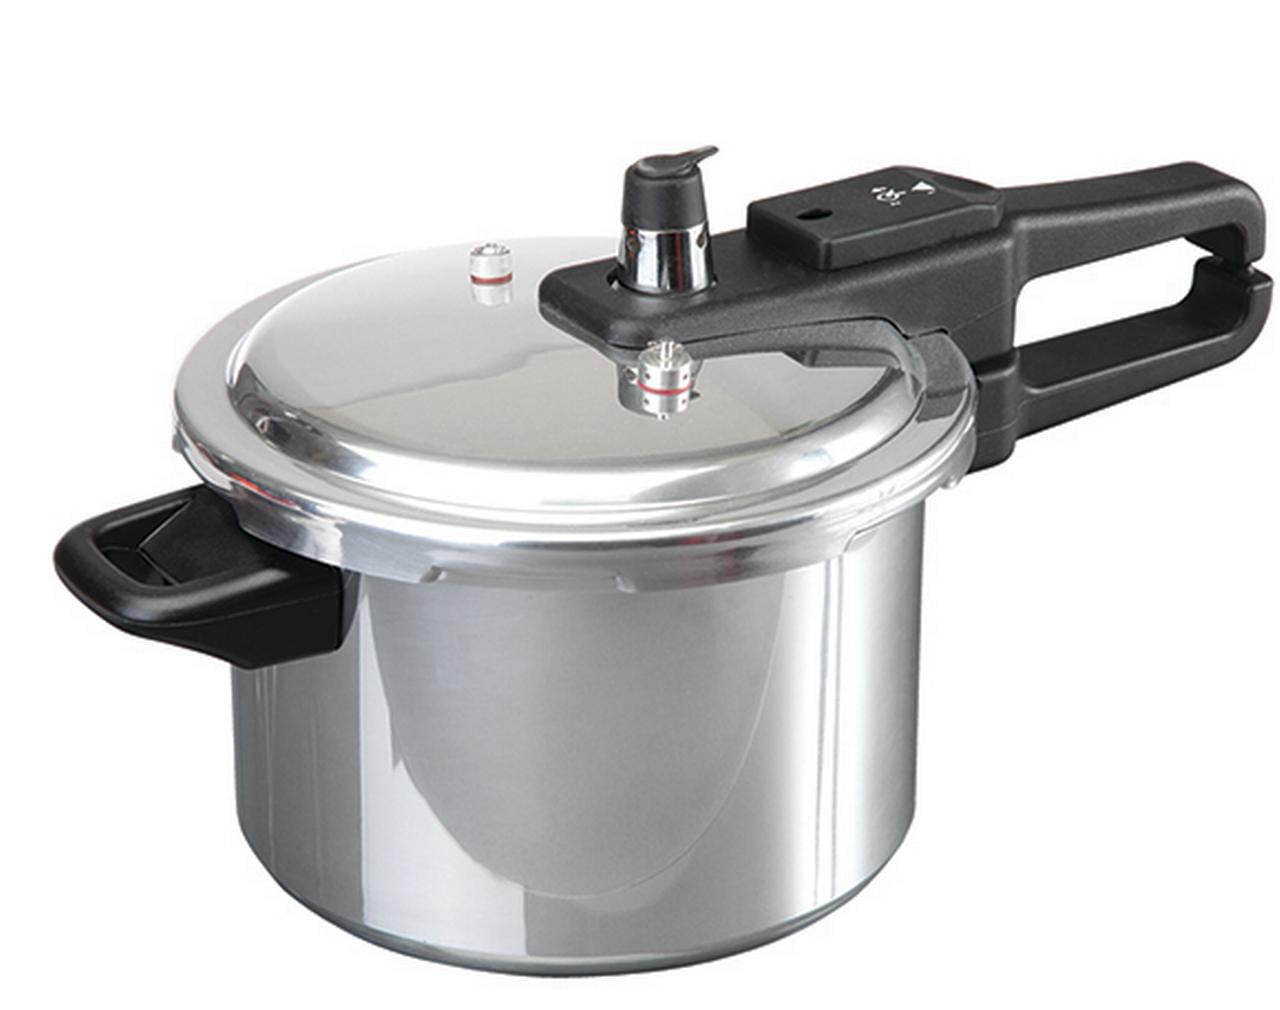 Cooks Essential 4qt Stainless Steel Digital Pressure Cooker w/ Lid - Black